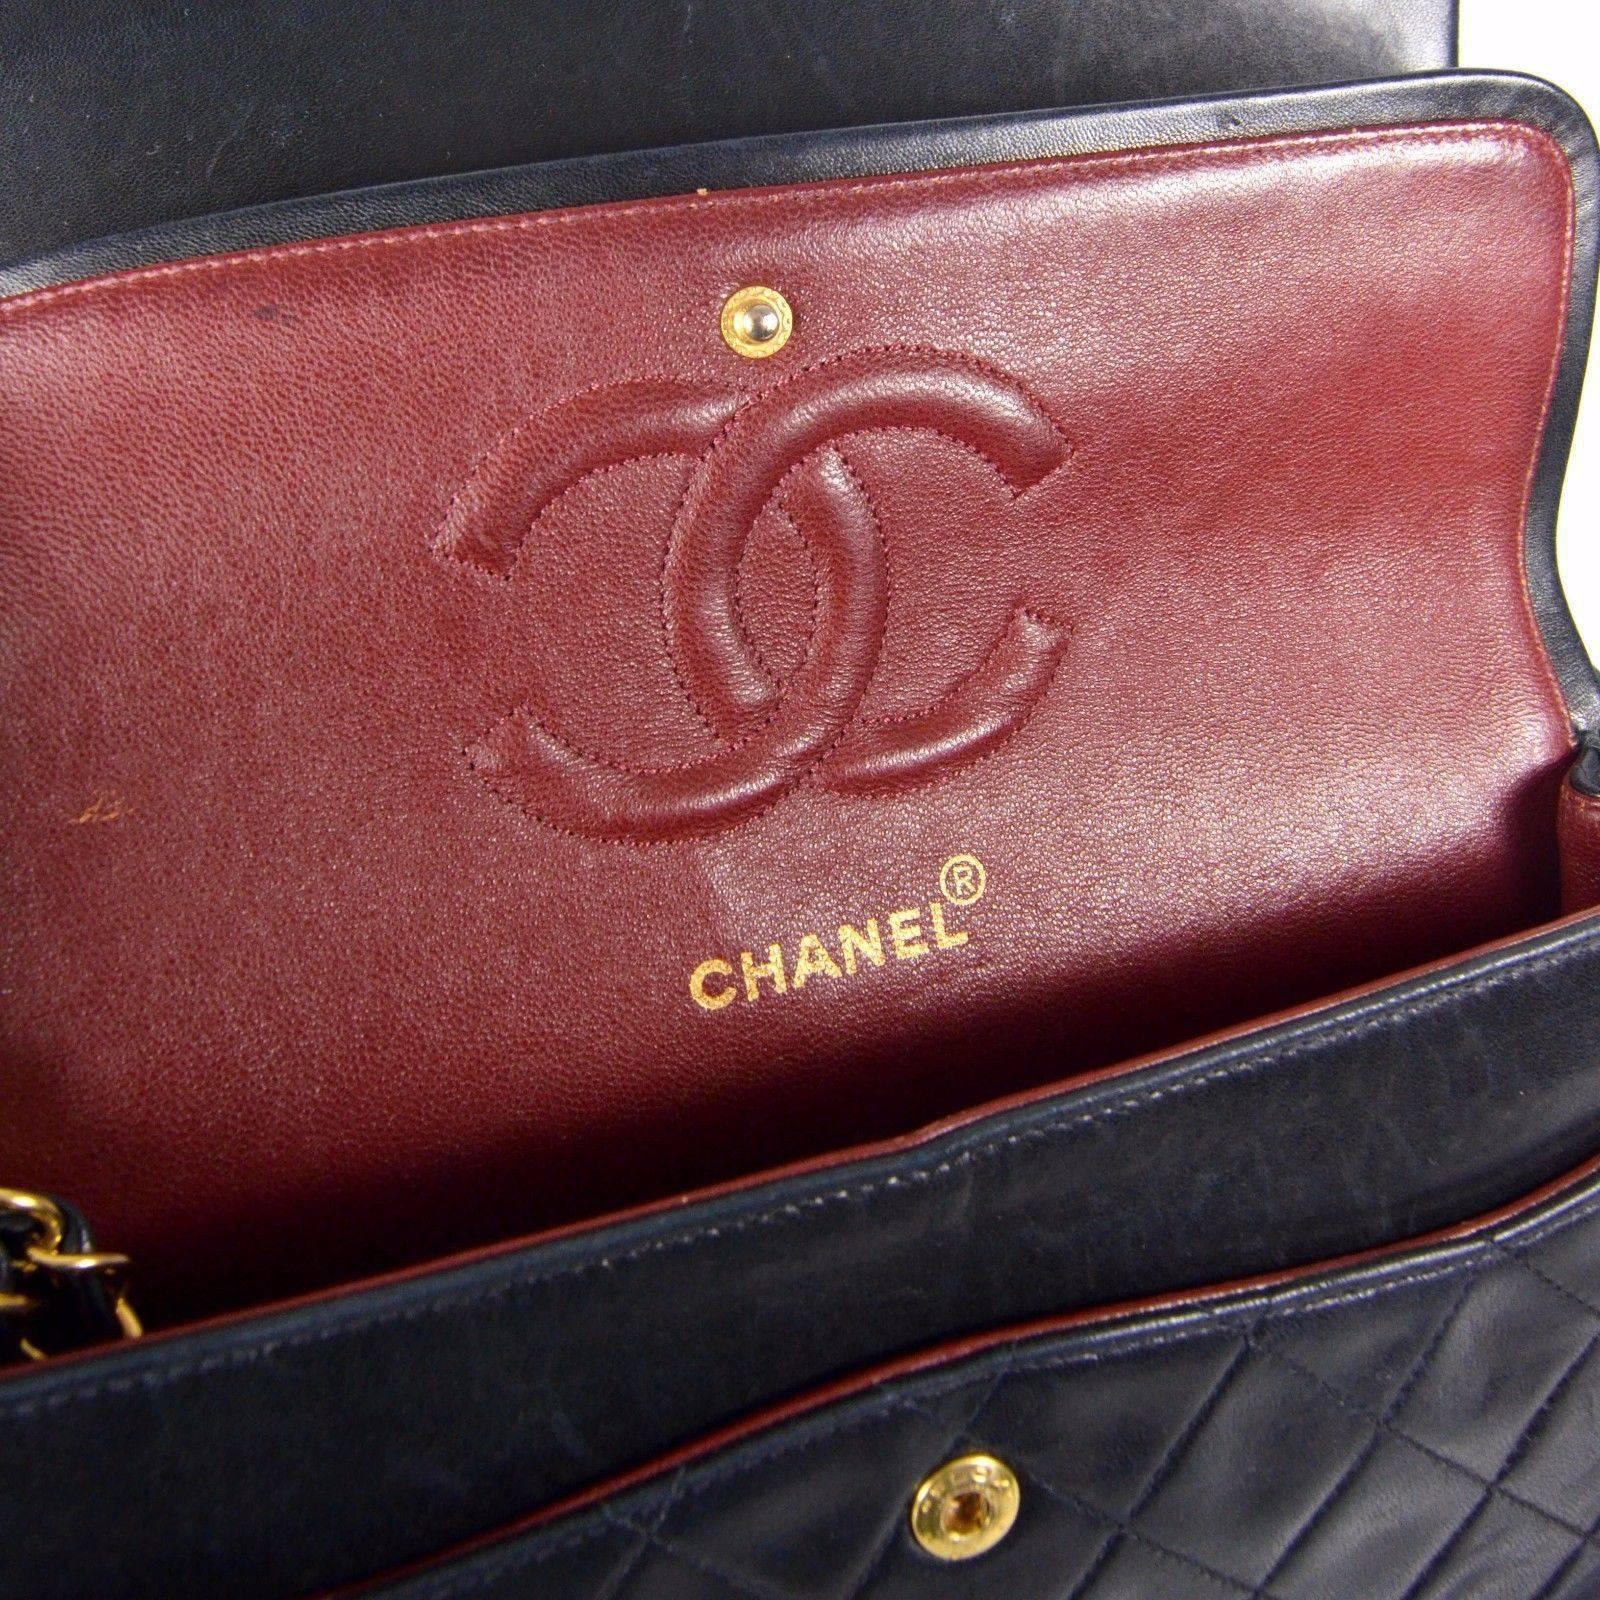 Chanel Medium Black Leather Bag - Quilted Double Flap CC Gold Shoulder Handbag 4